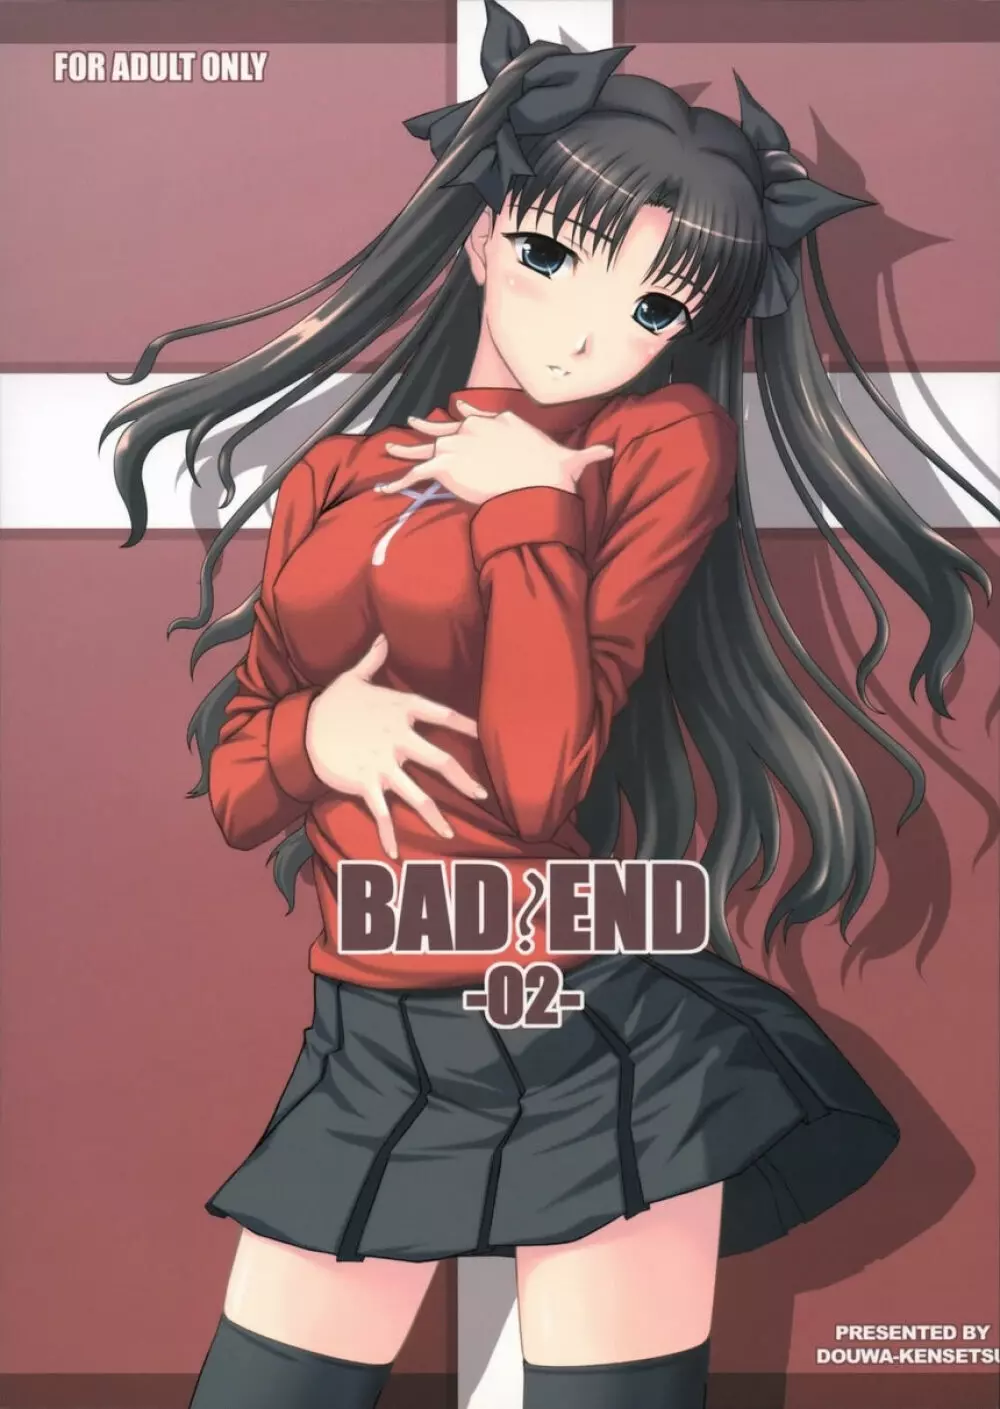 BAD?END -02-